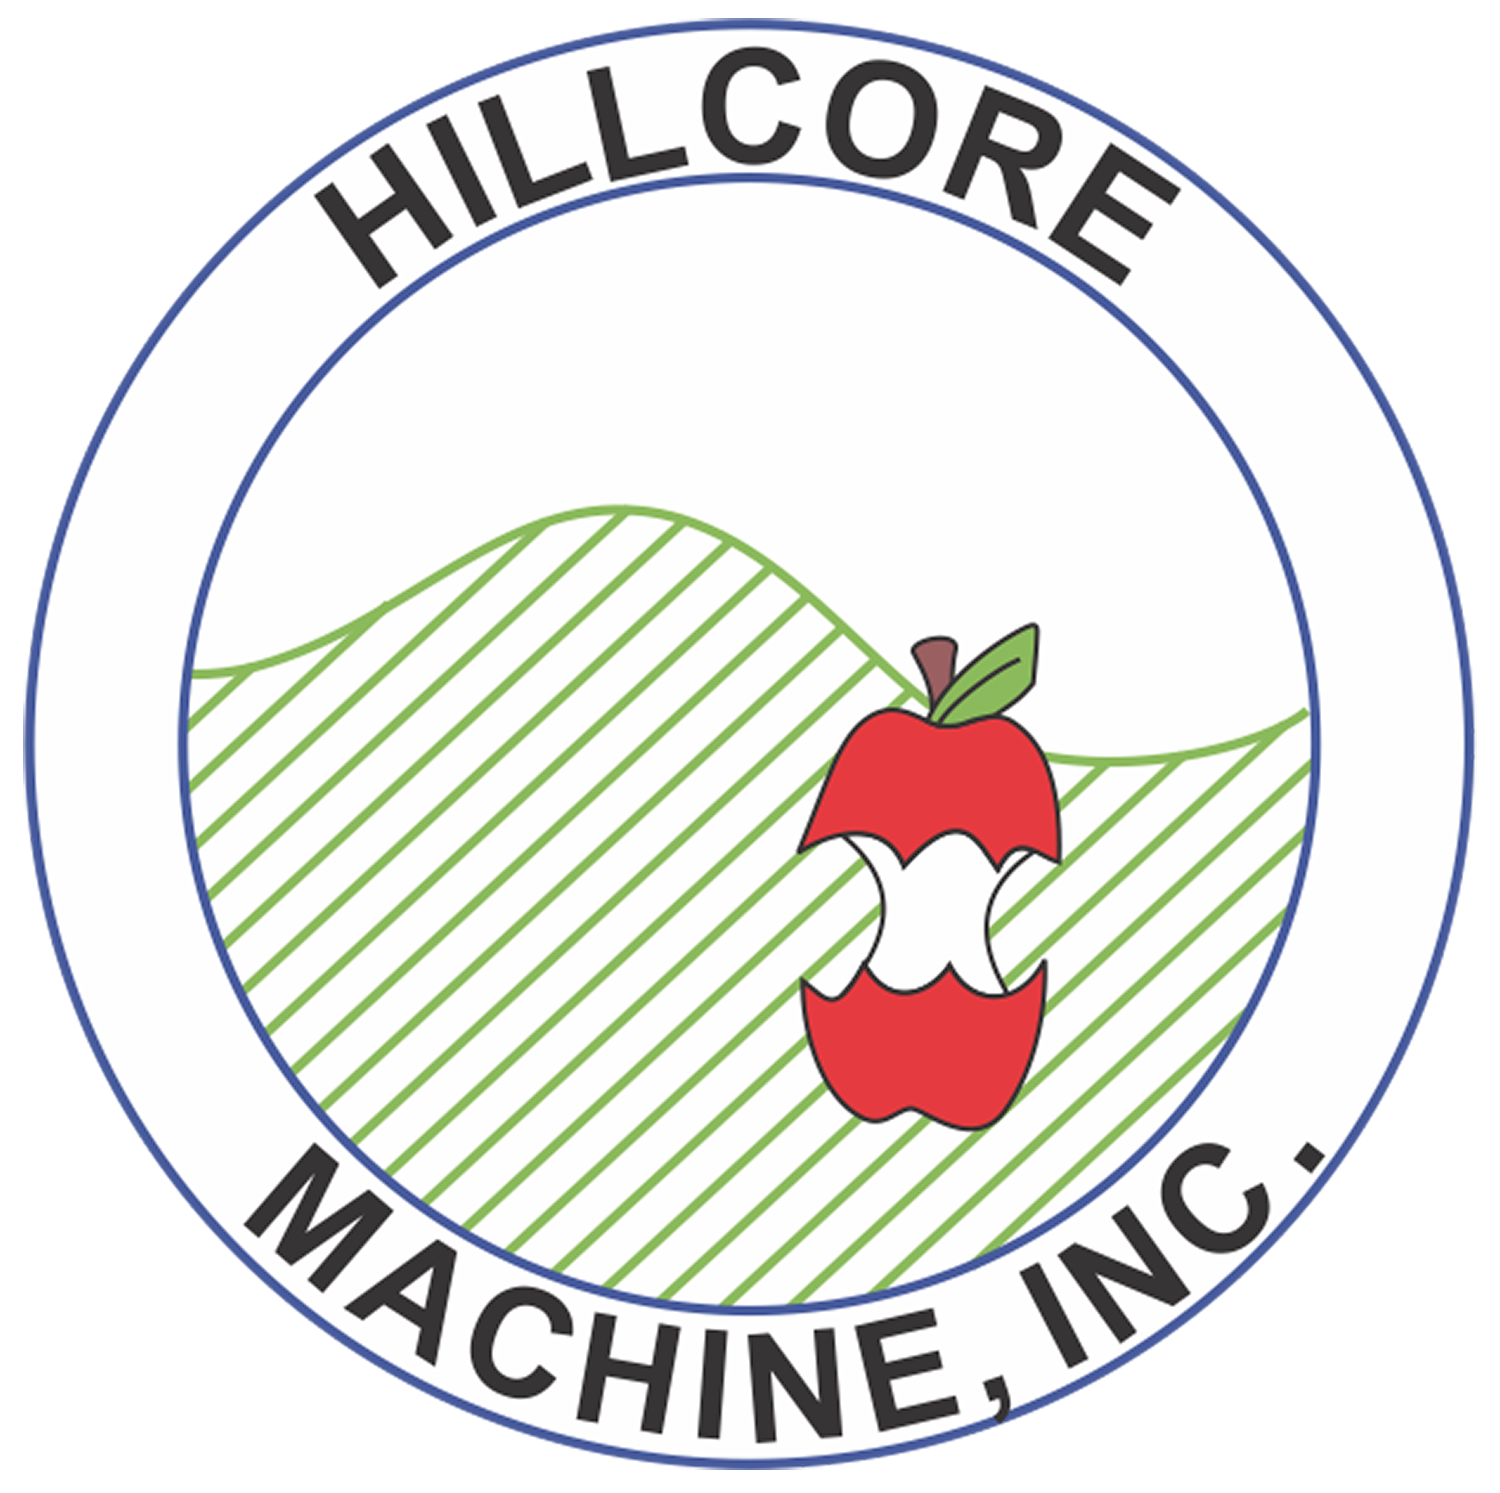 Hillcore Machine, Inc.